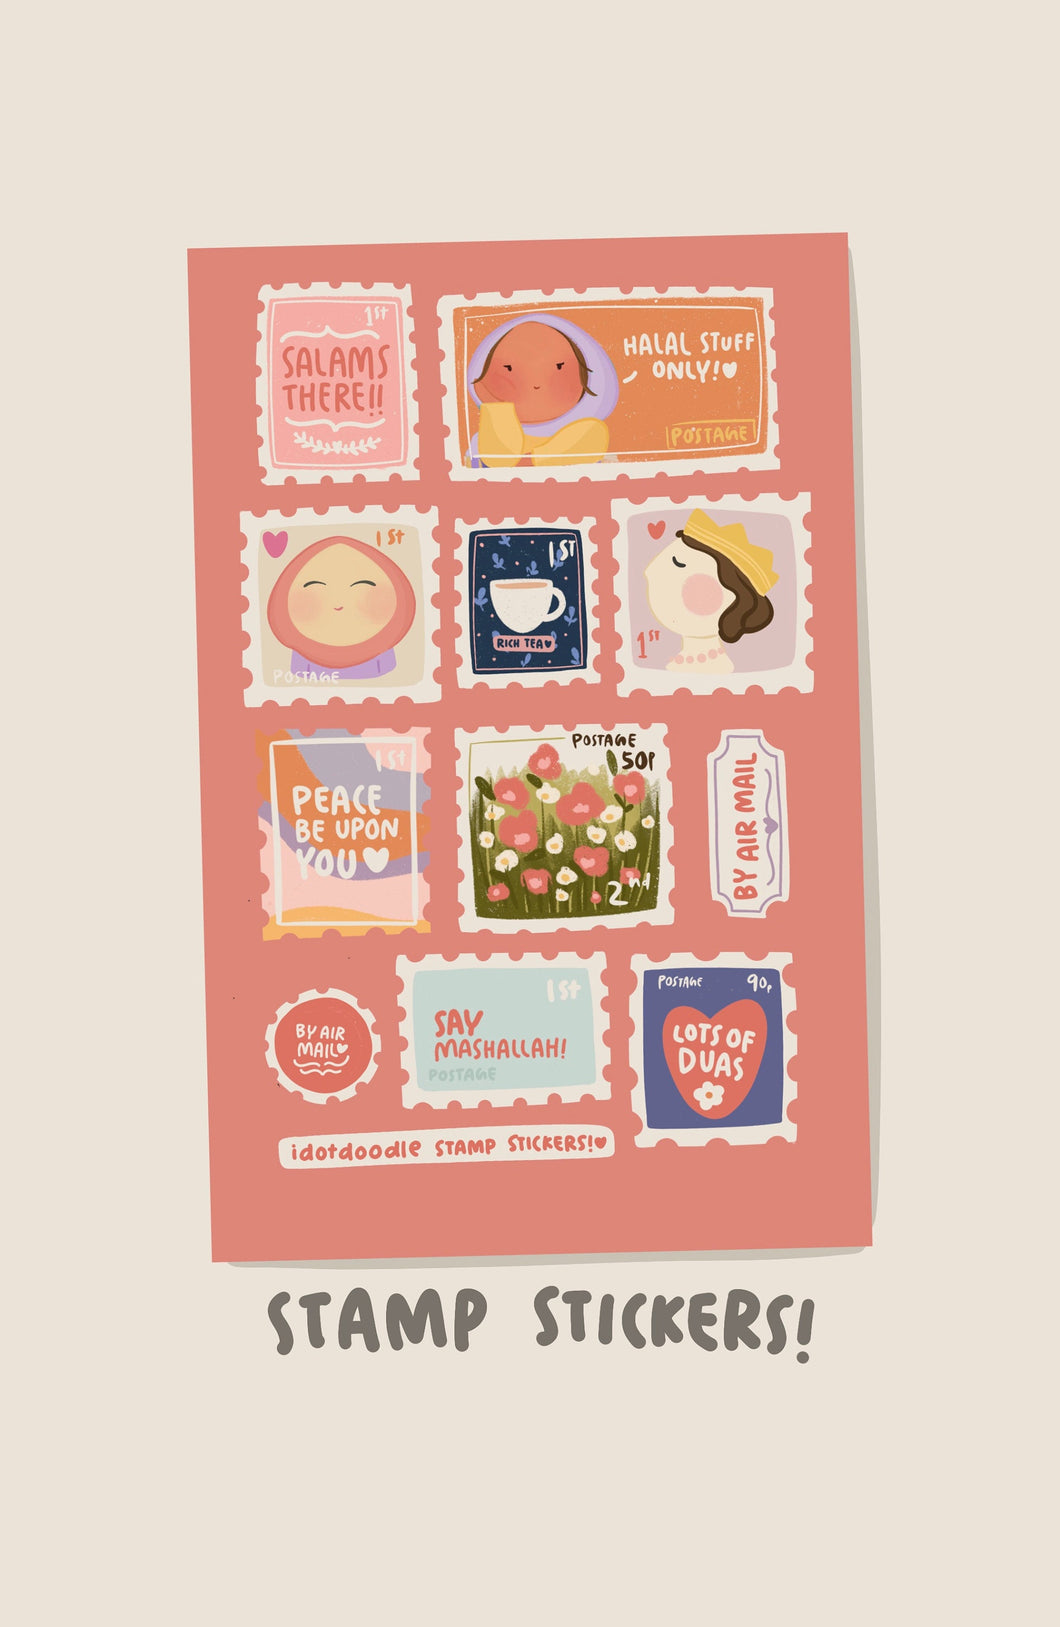 Idotdoodle Journal Sticker Sheet - Stamp